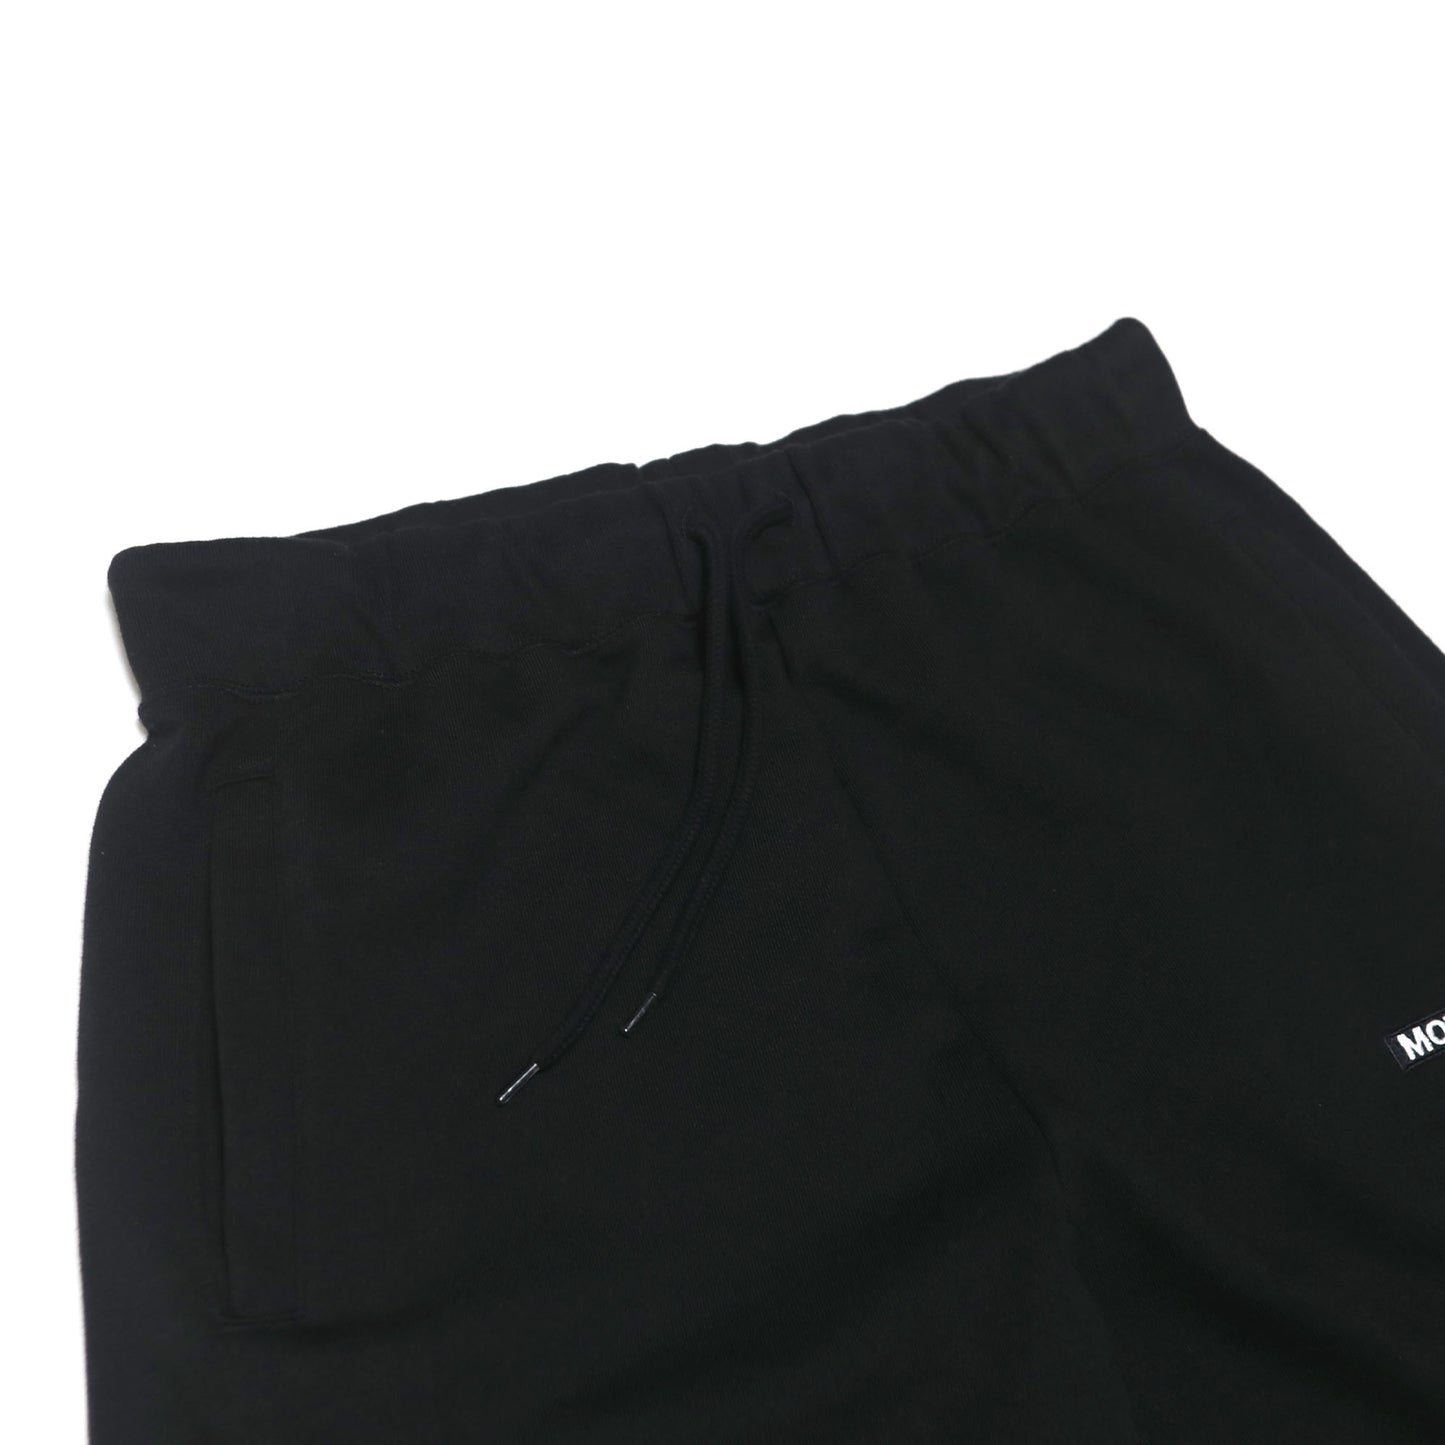 [2月28日再入荷予定] MOTO-BUNKA - Box Logo Sweatpants/Black